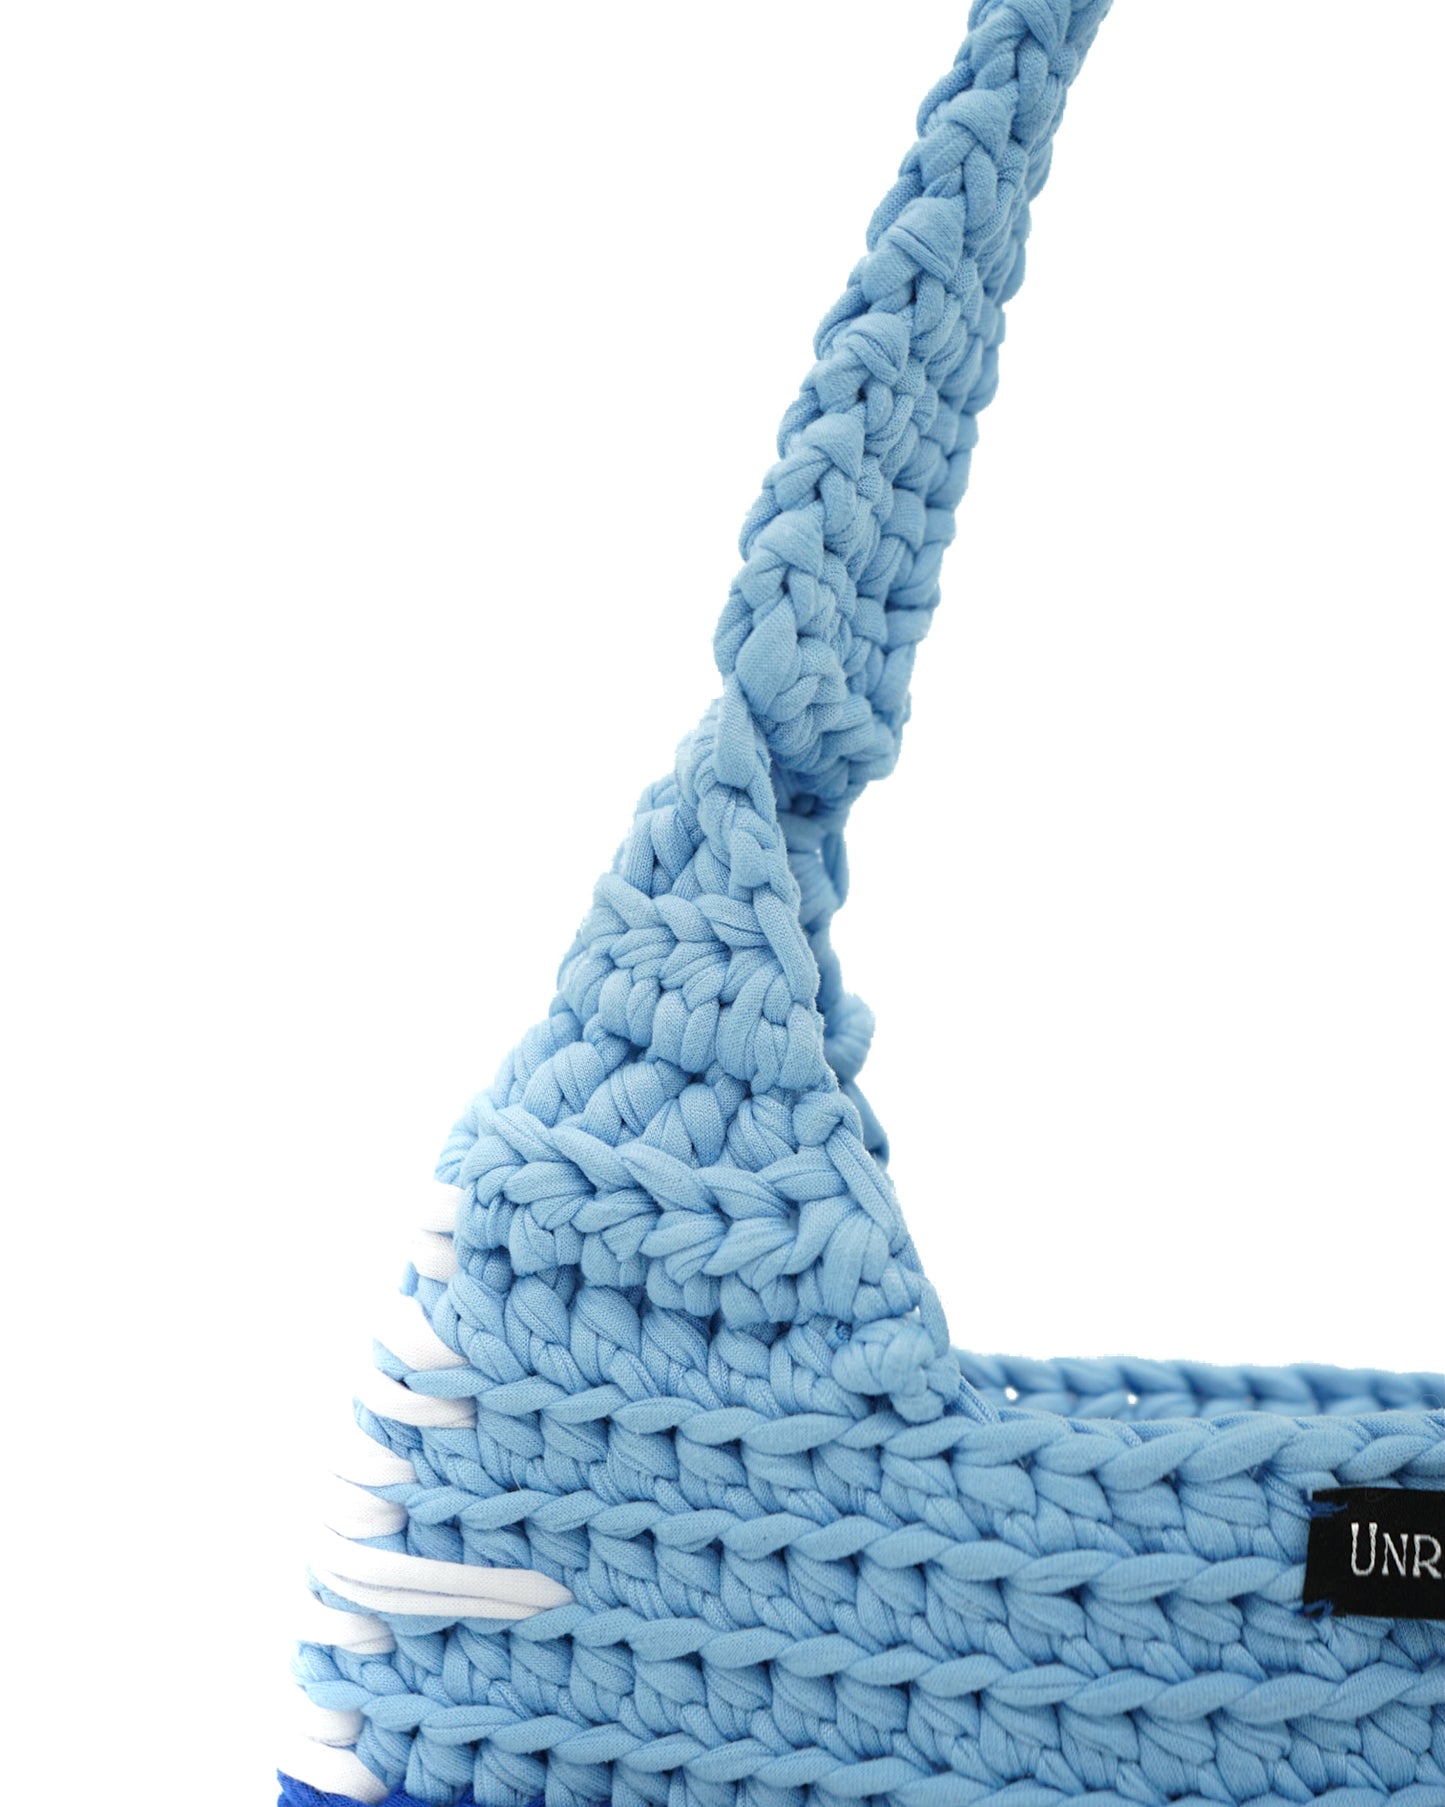 Oceana Crochet Shoulder Bag